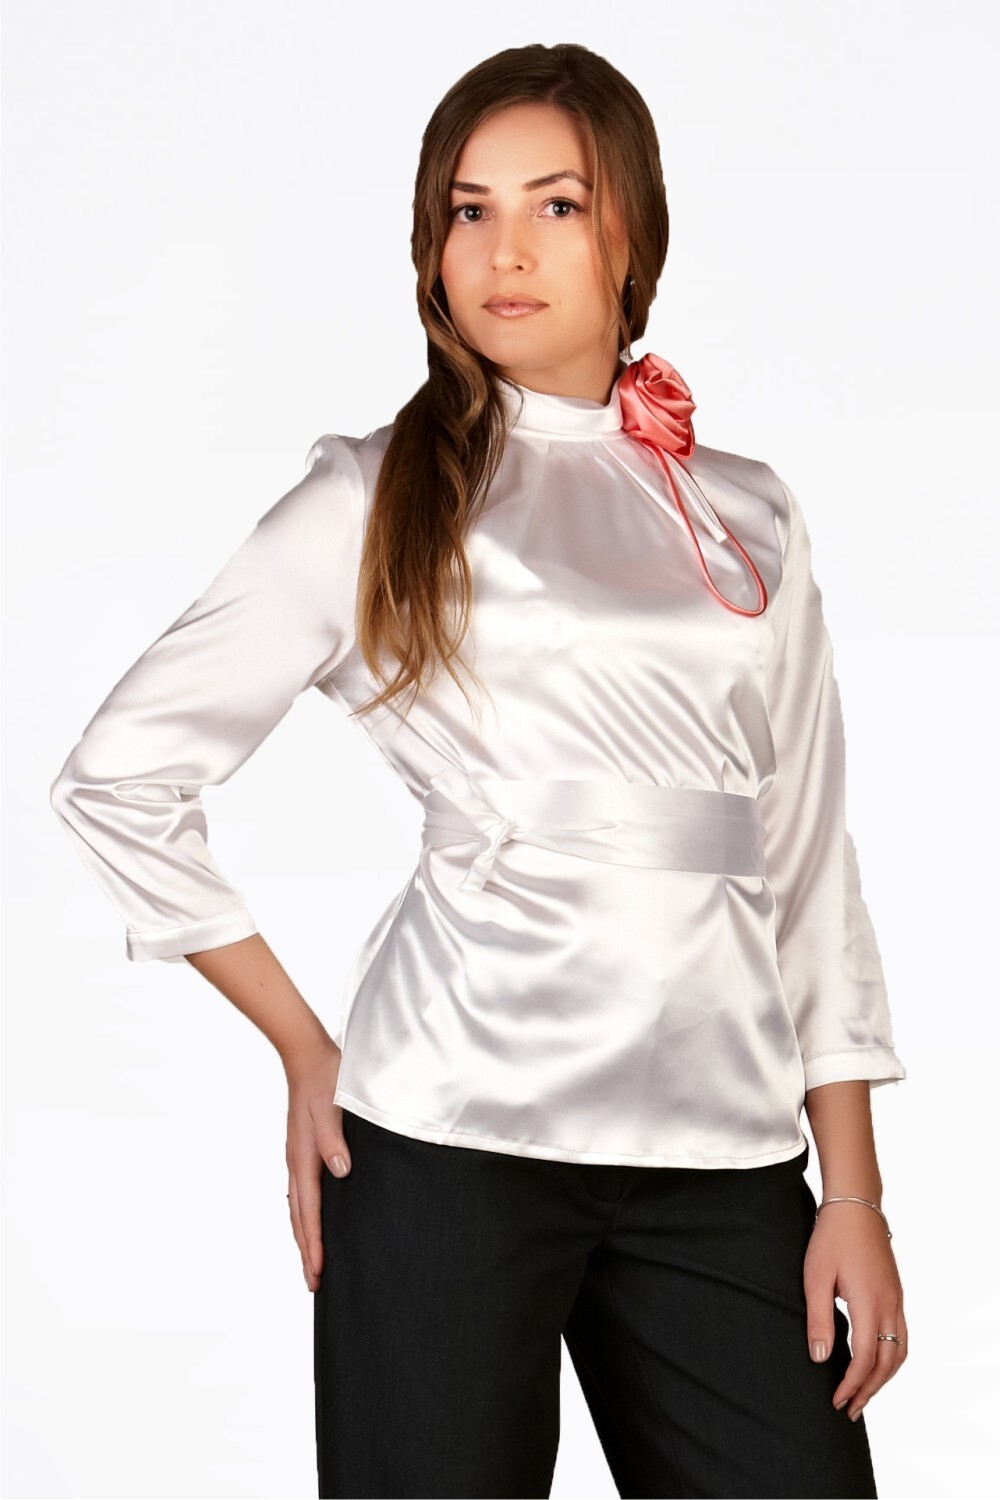 Блузки недорого интернет магазин. Белая блузка. Блузки из атласа. Белая нарядная блузка для женщин. Белая атласная блузка.